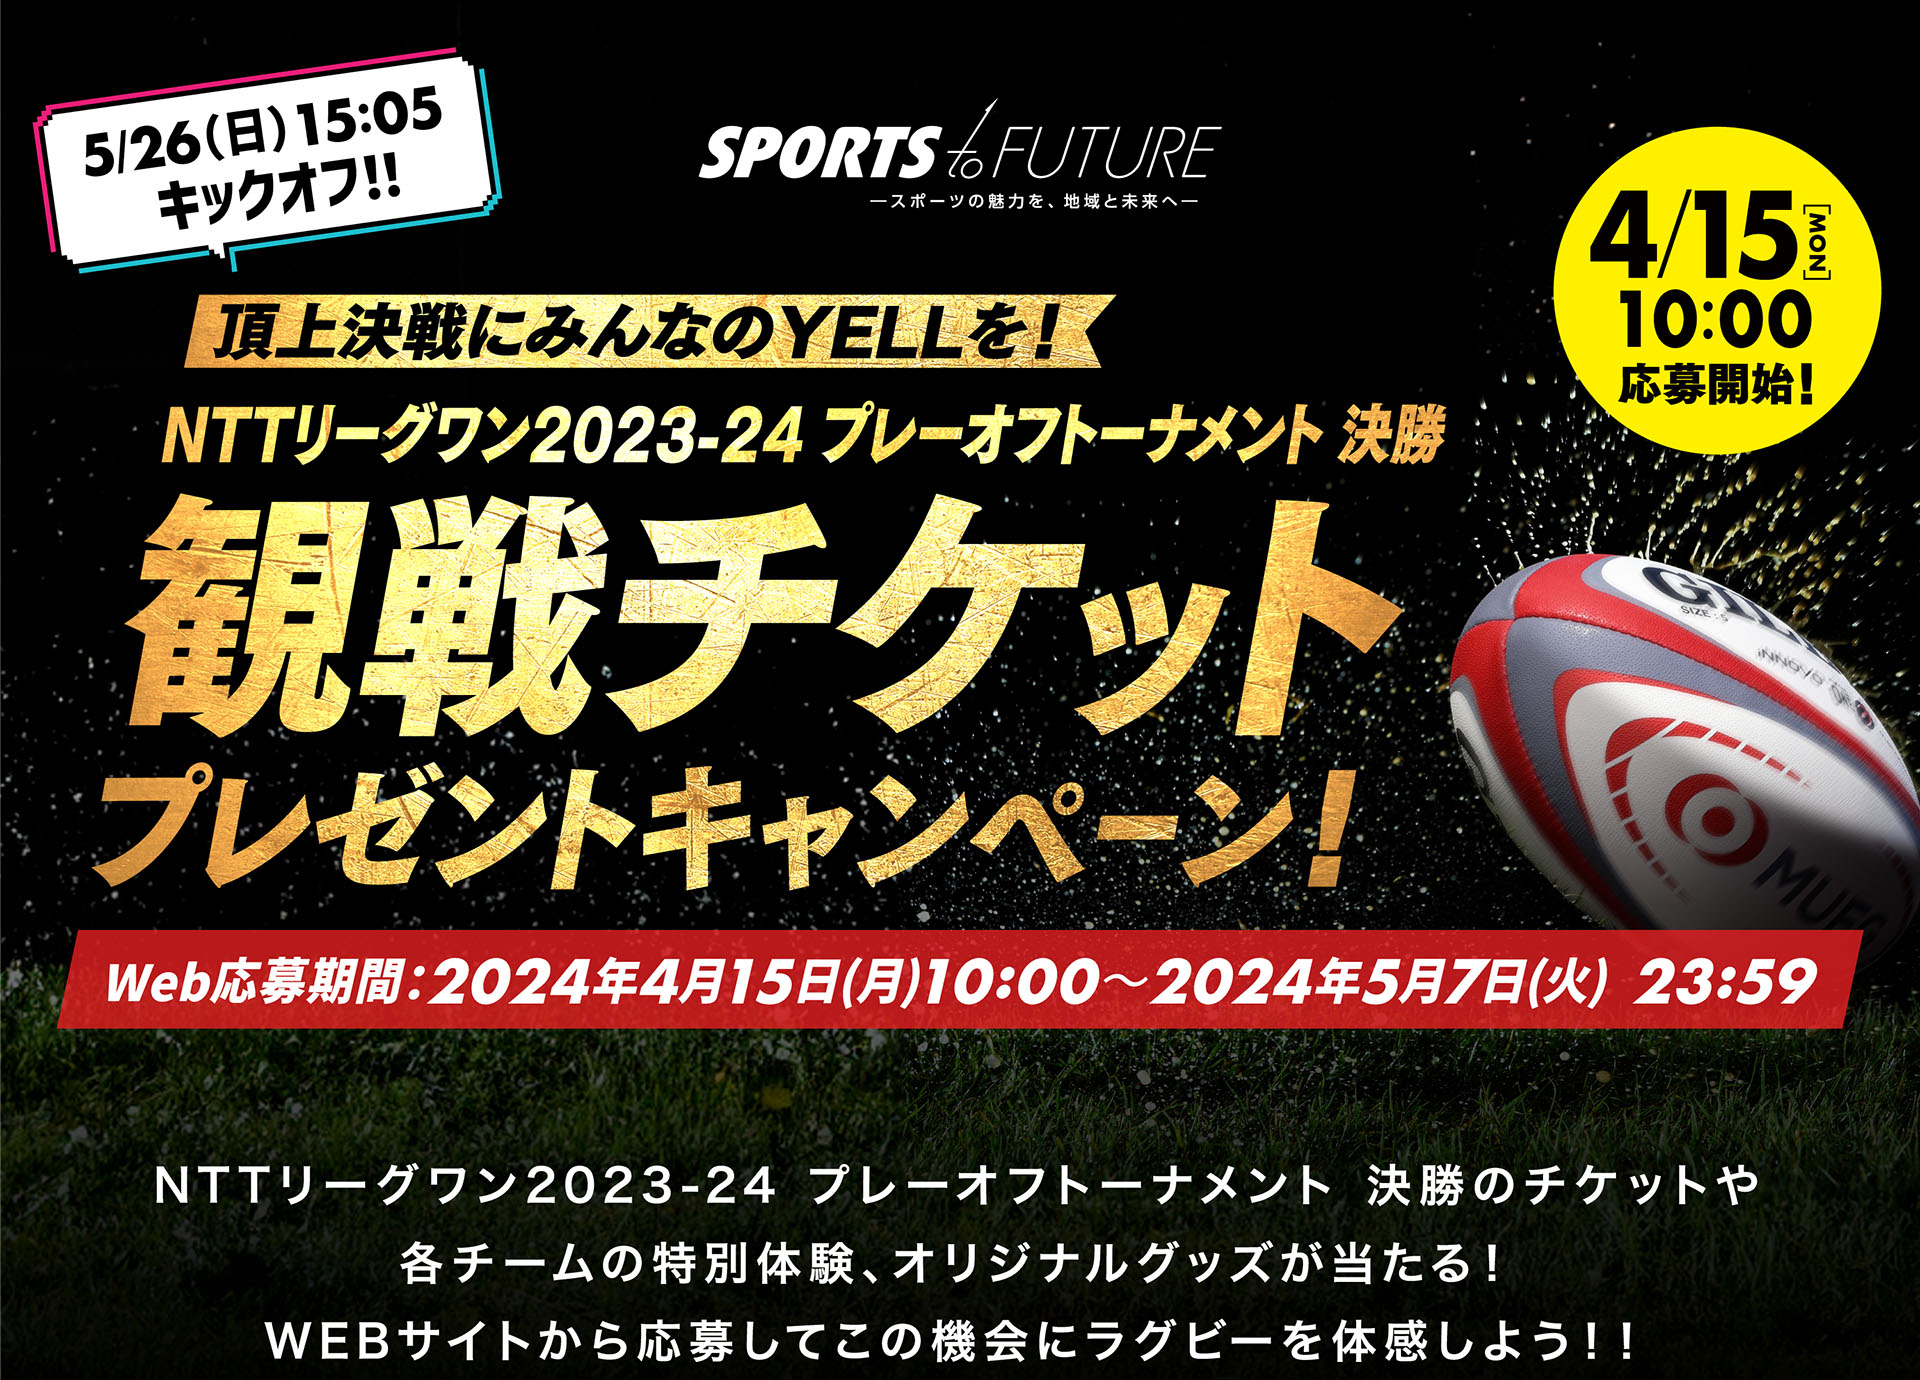 NTTリーグワン2023-24 プレーオフトーナメント 決勝 観戦チケット